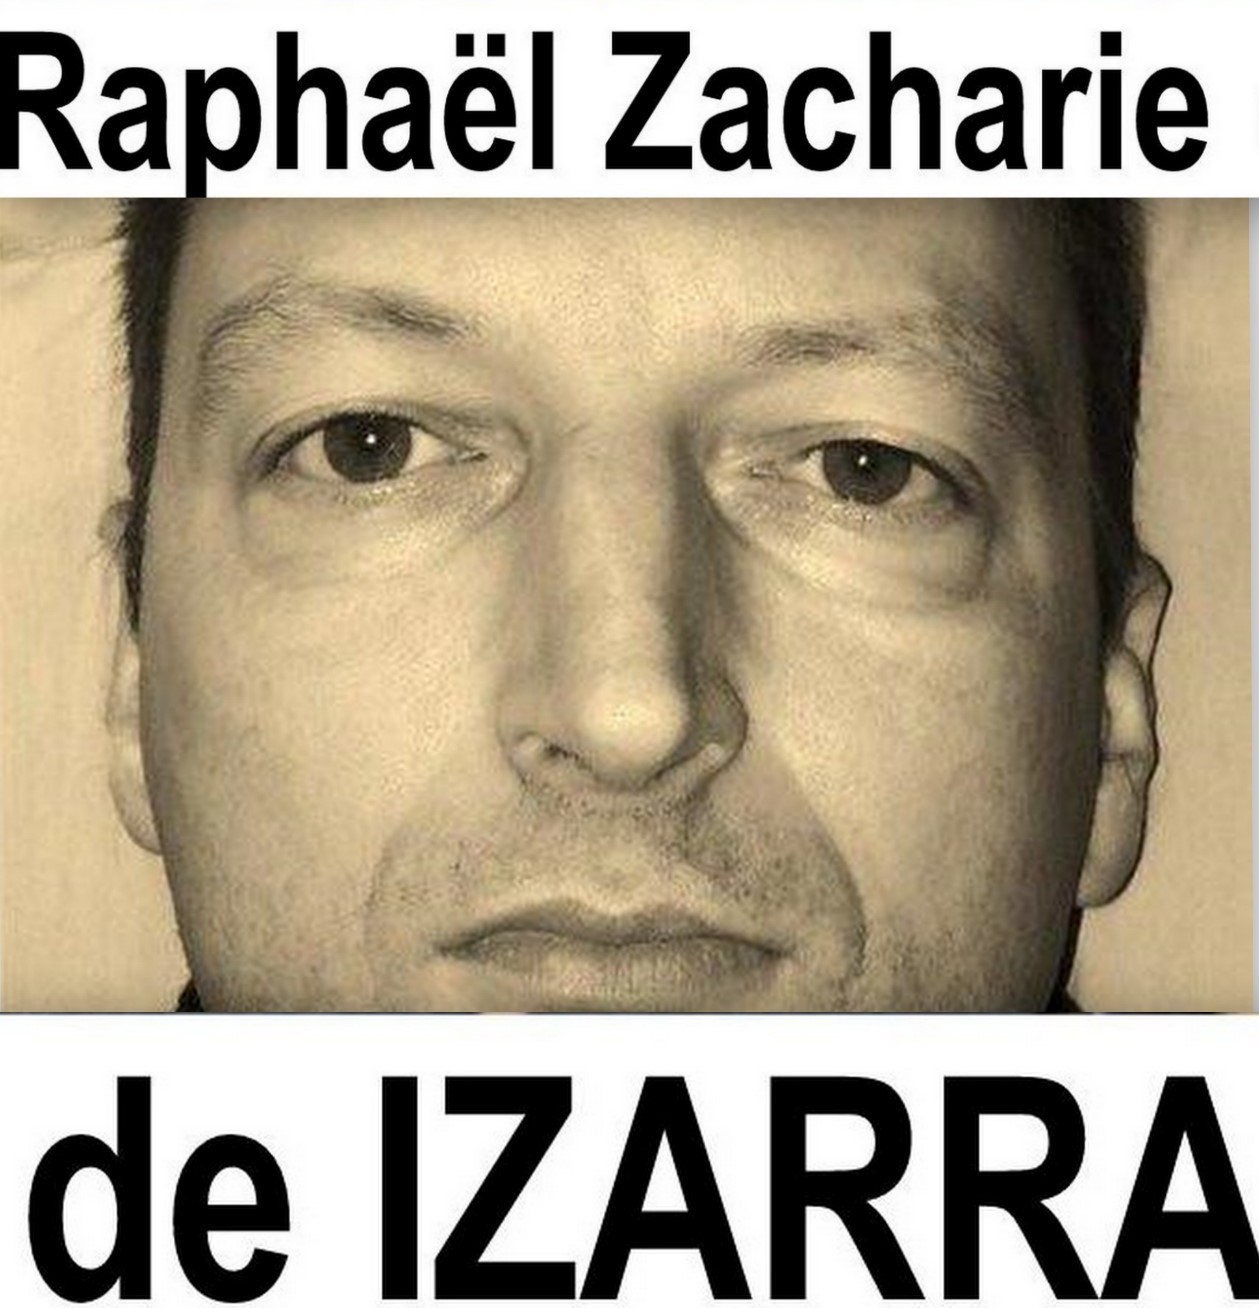 B F Wwwwxxxxcccc Video - RaphaÃ«l Zacharie de IZARRA - Farrah Fawcett: 6 - RaphaÃ«l Zacharie ...